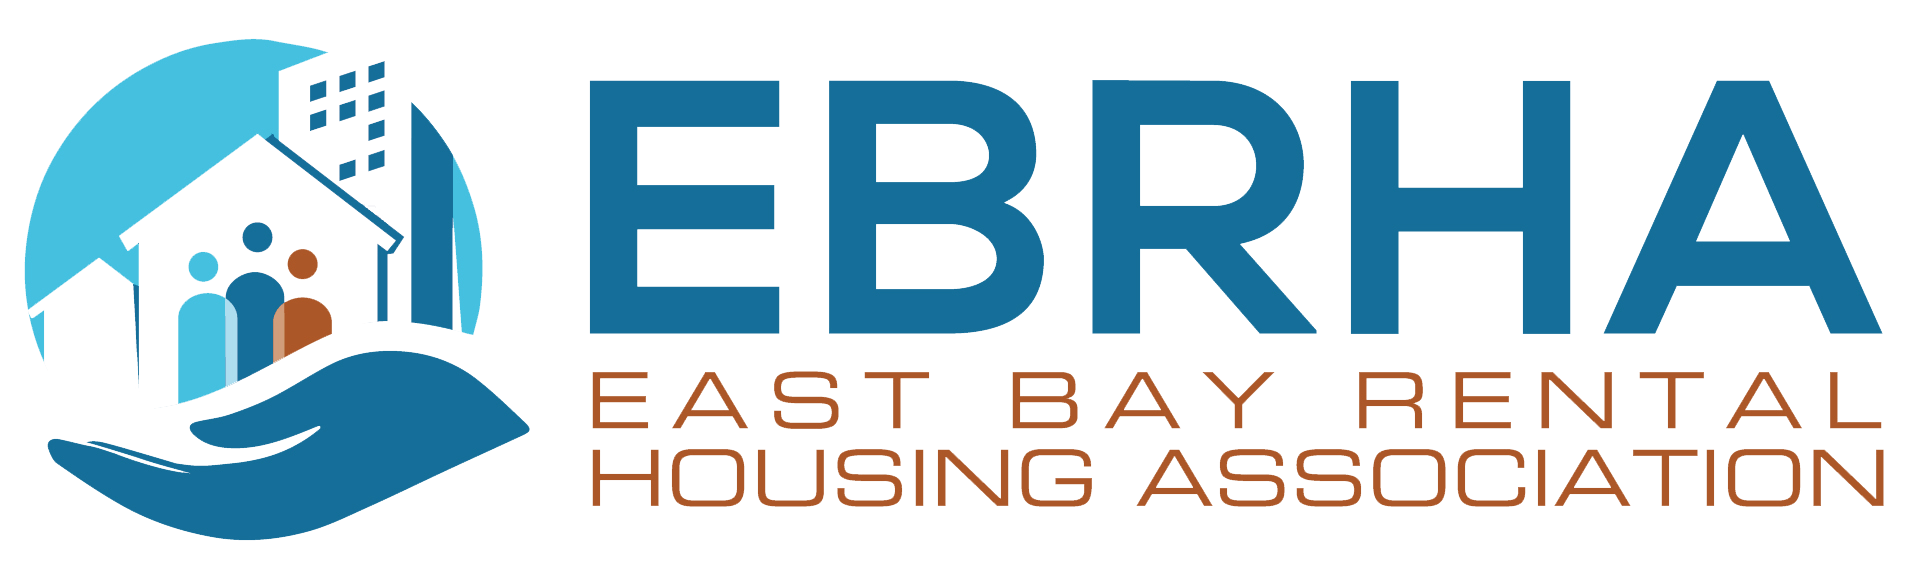 East Bay Rental Housing Association Logo